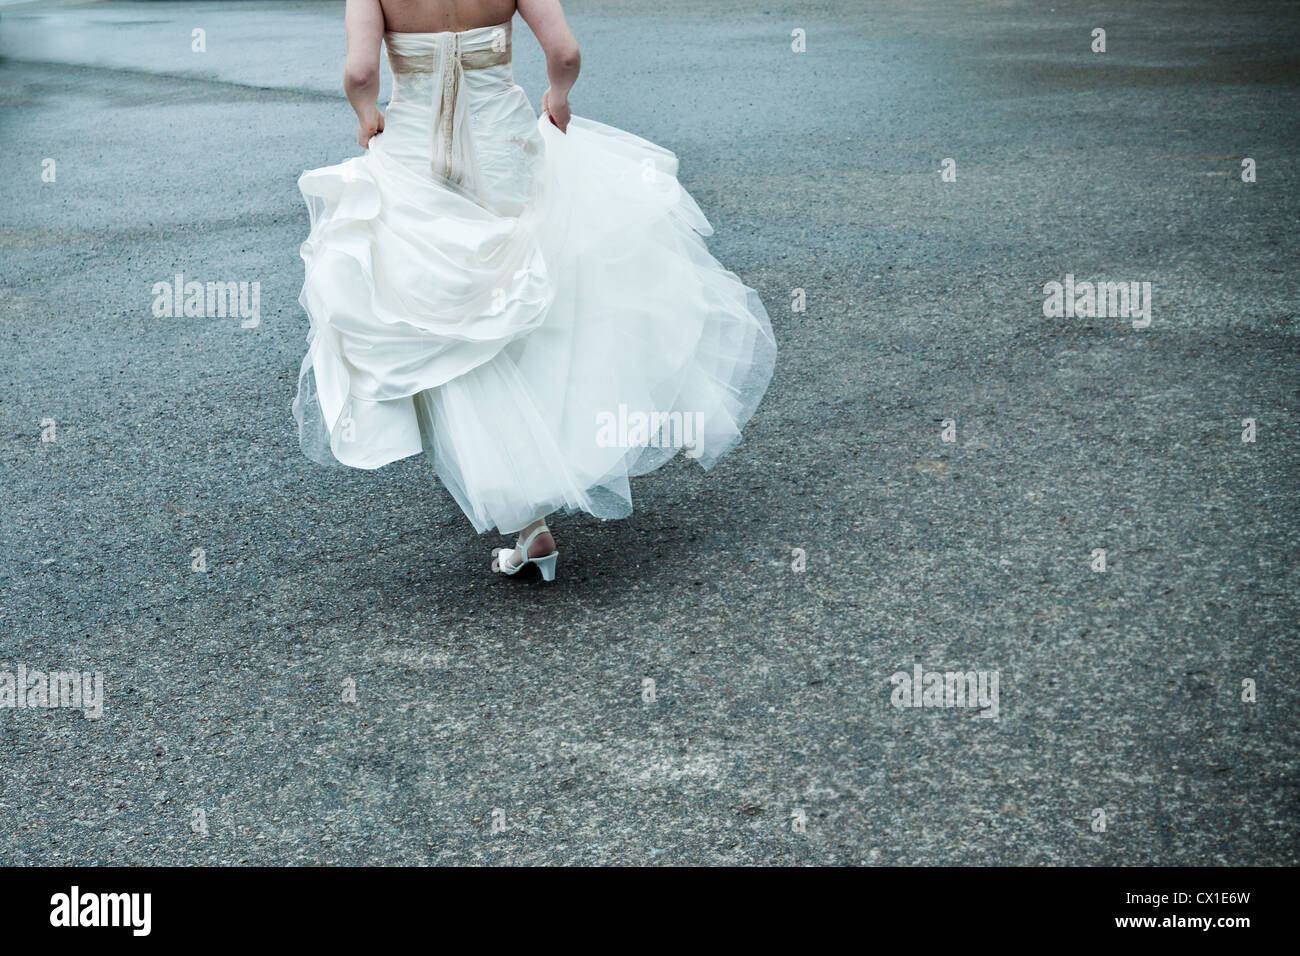 women runs in the wedding dress Stock Photo